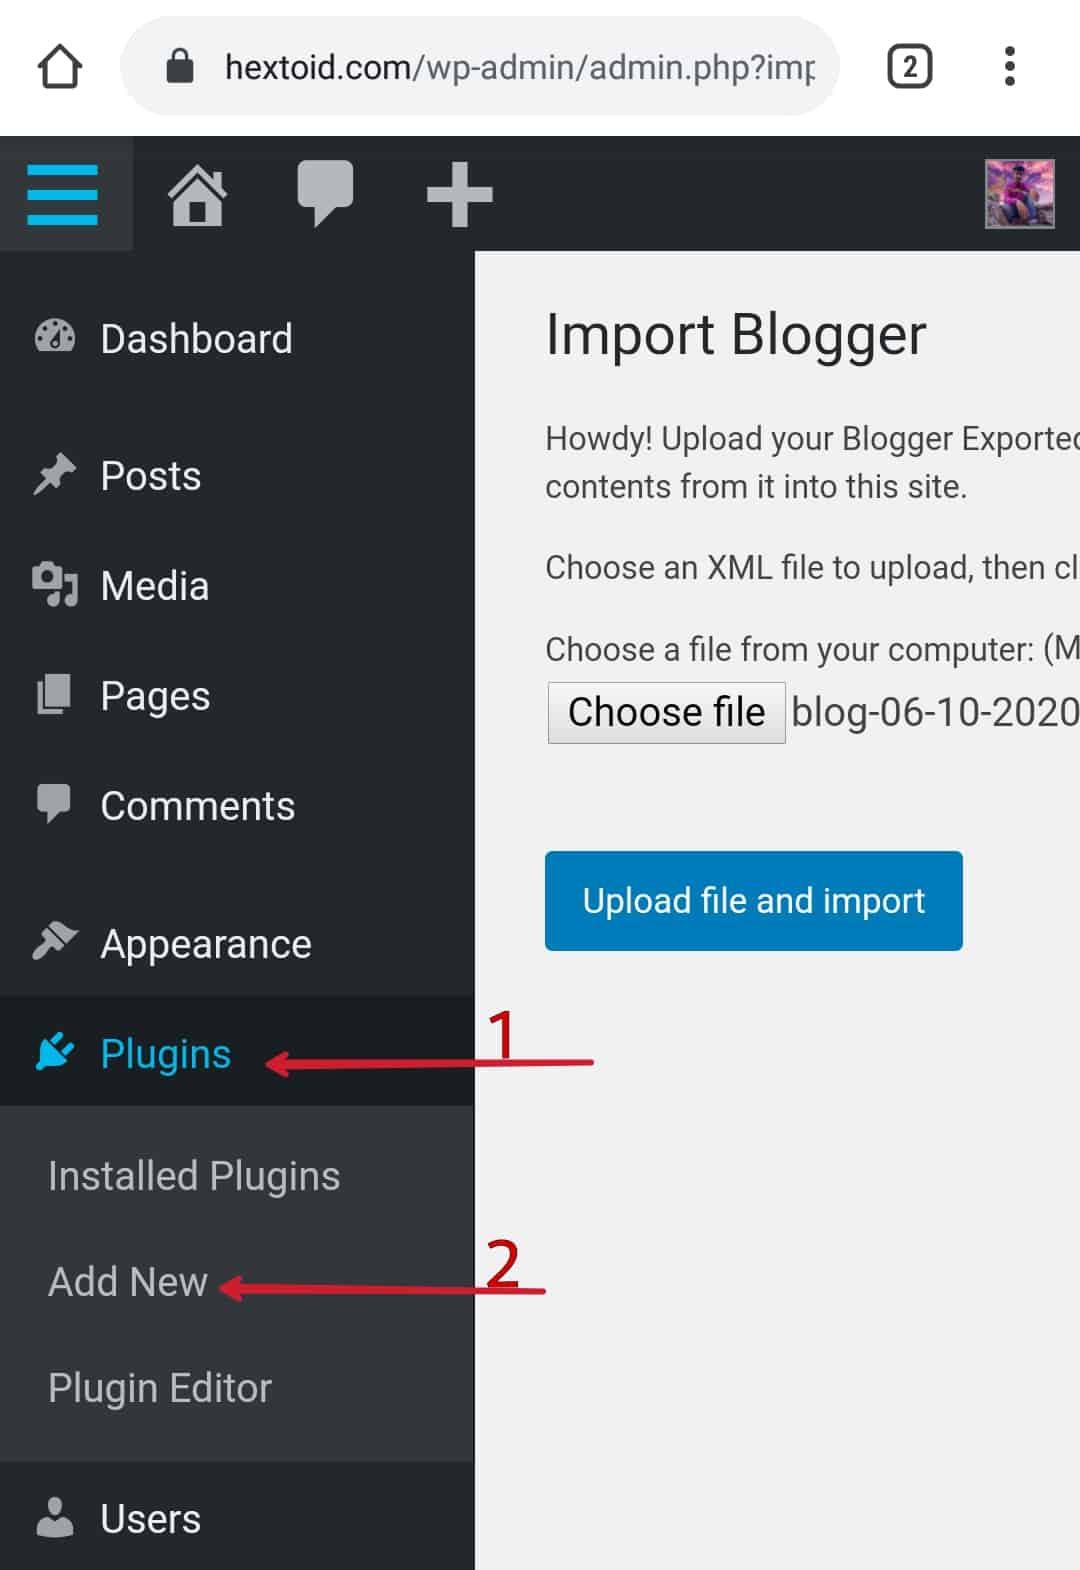 Login to WordPress dashboard > Plugins > Add New